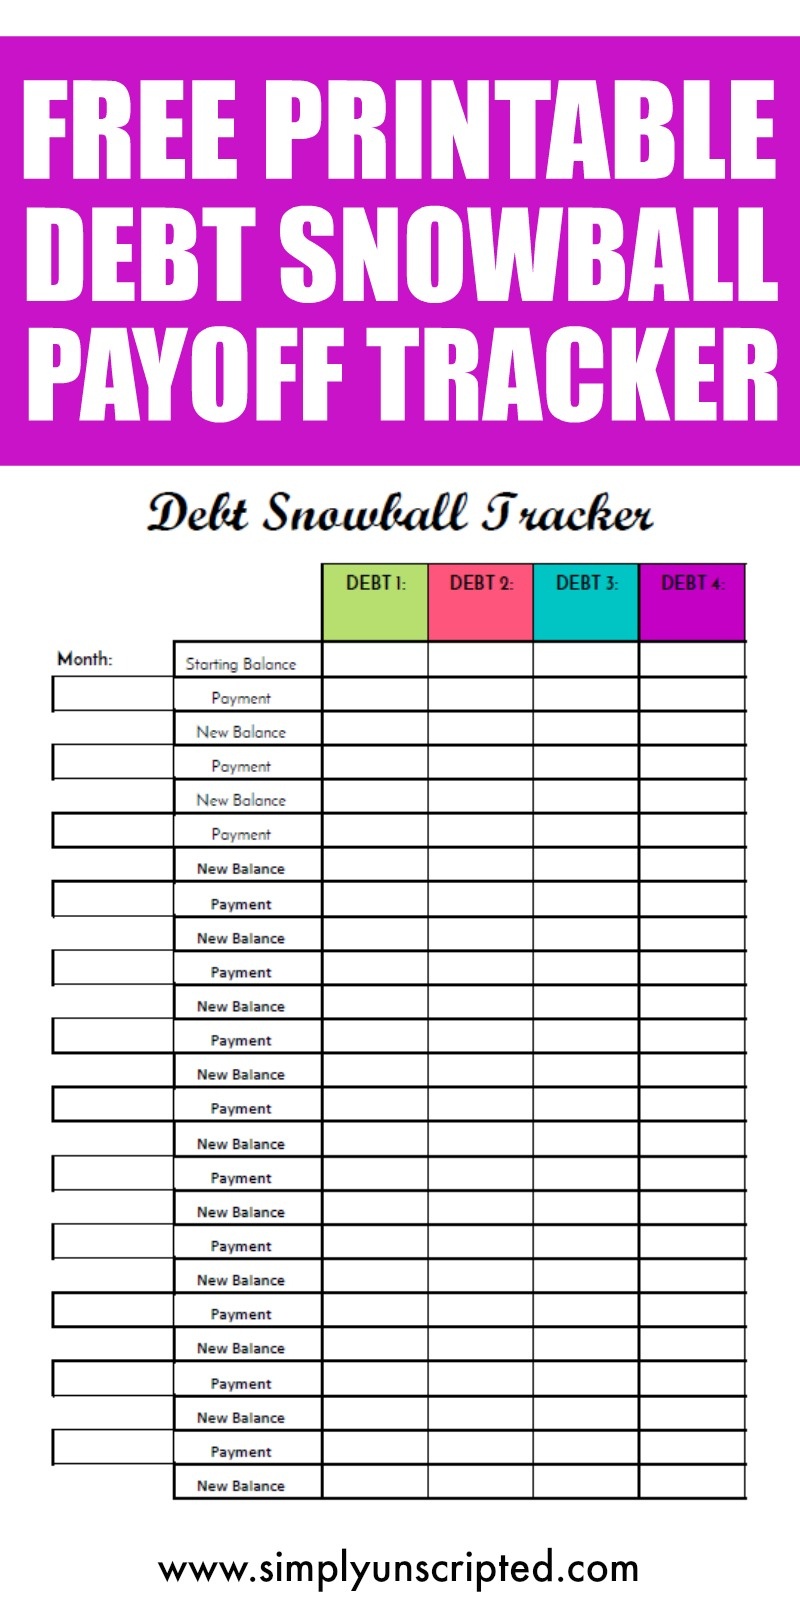 Free Debt Snowball Tracker Printable - Simply Unscripted - Free Printable Debt Snowball Worksheet